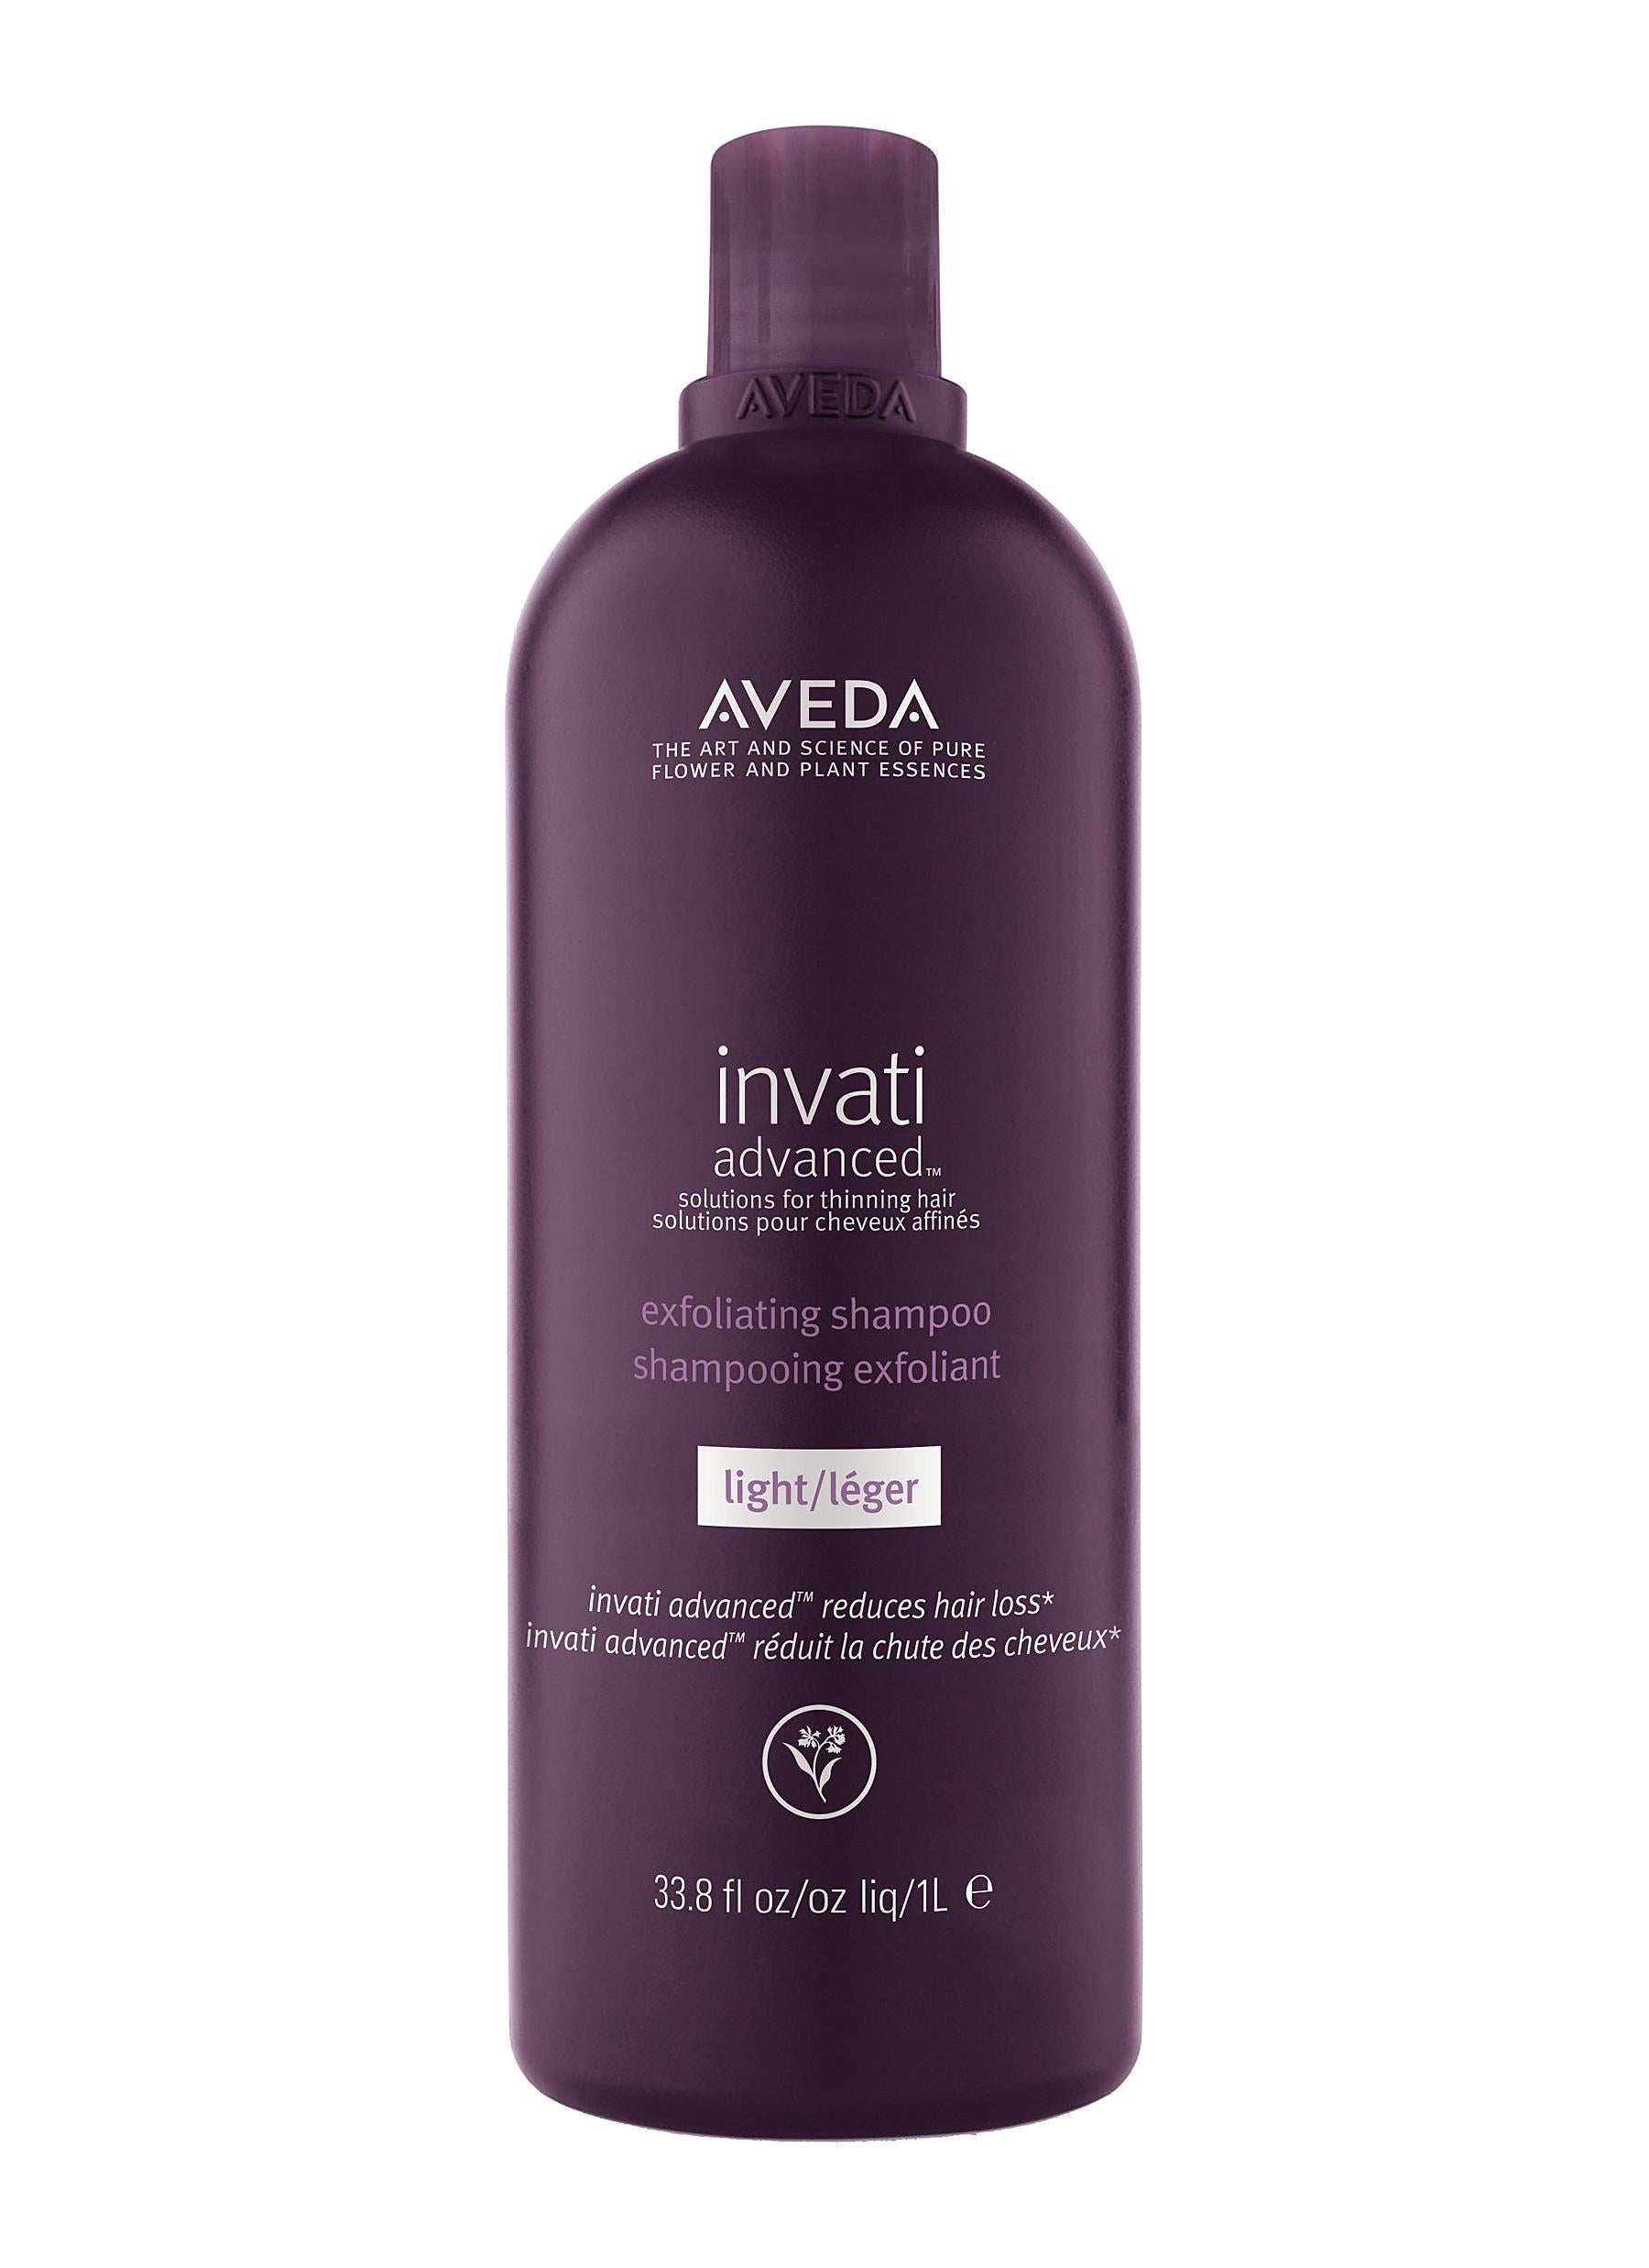 AVEDA Iinvati advanced™ 頭皮淨化洗髮水 - 輕柔配方 | NVATI ADVANCED™ EXFOLIATING SHAMPOO LIGHT 1000ML